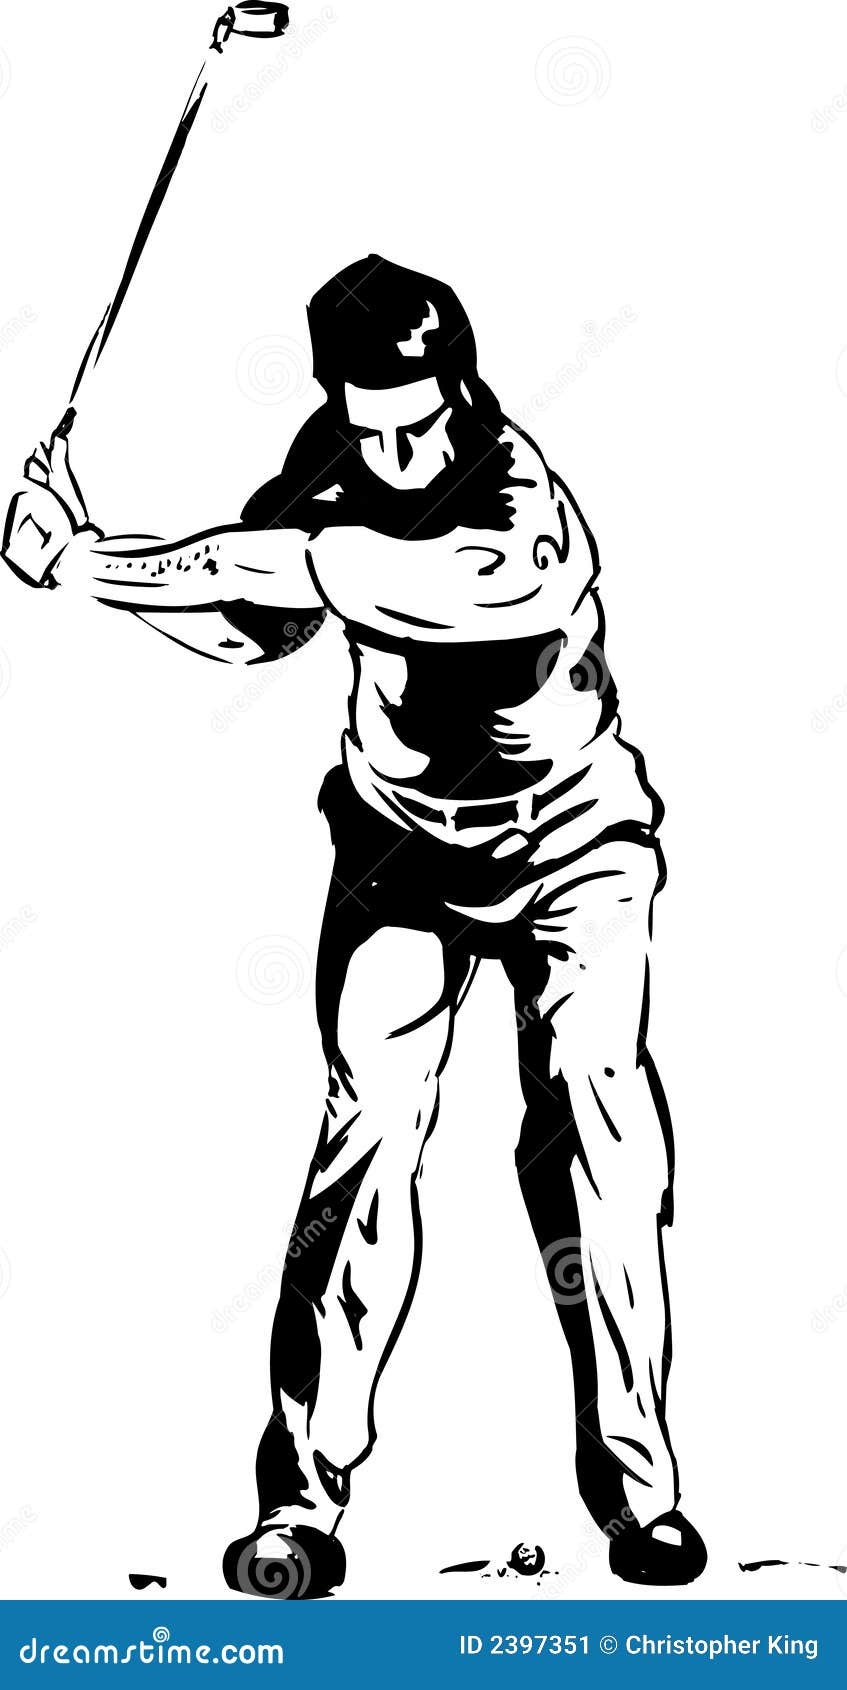 The Golf Swing Pose stock illustration. Illustration of pose - 2397351